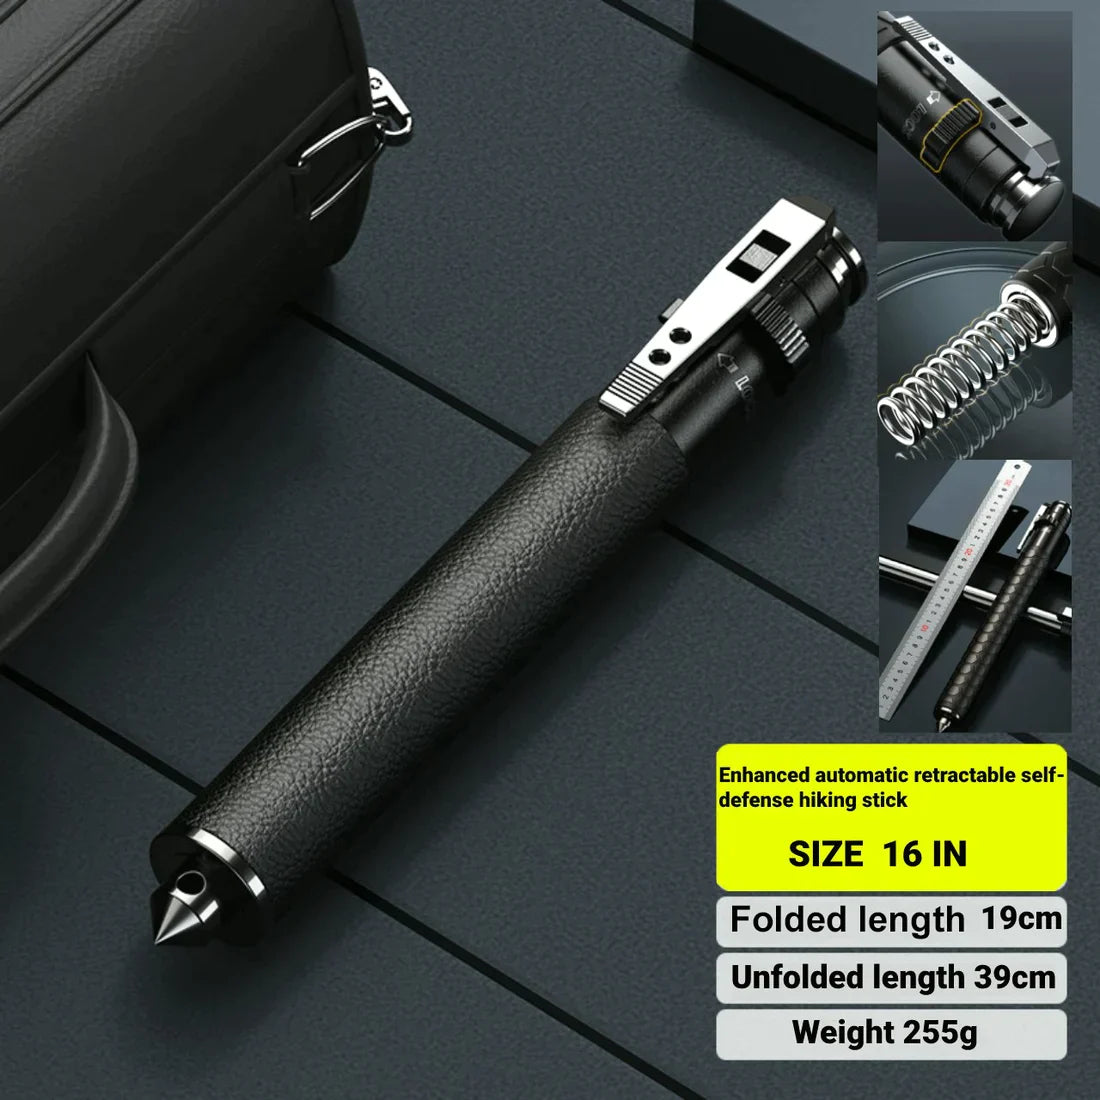 TravelTopp™ Enhanced Defense Stick